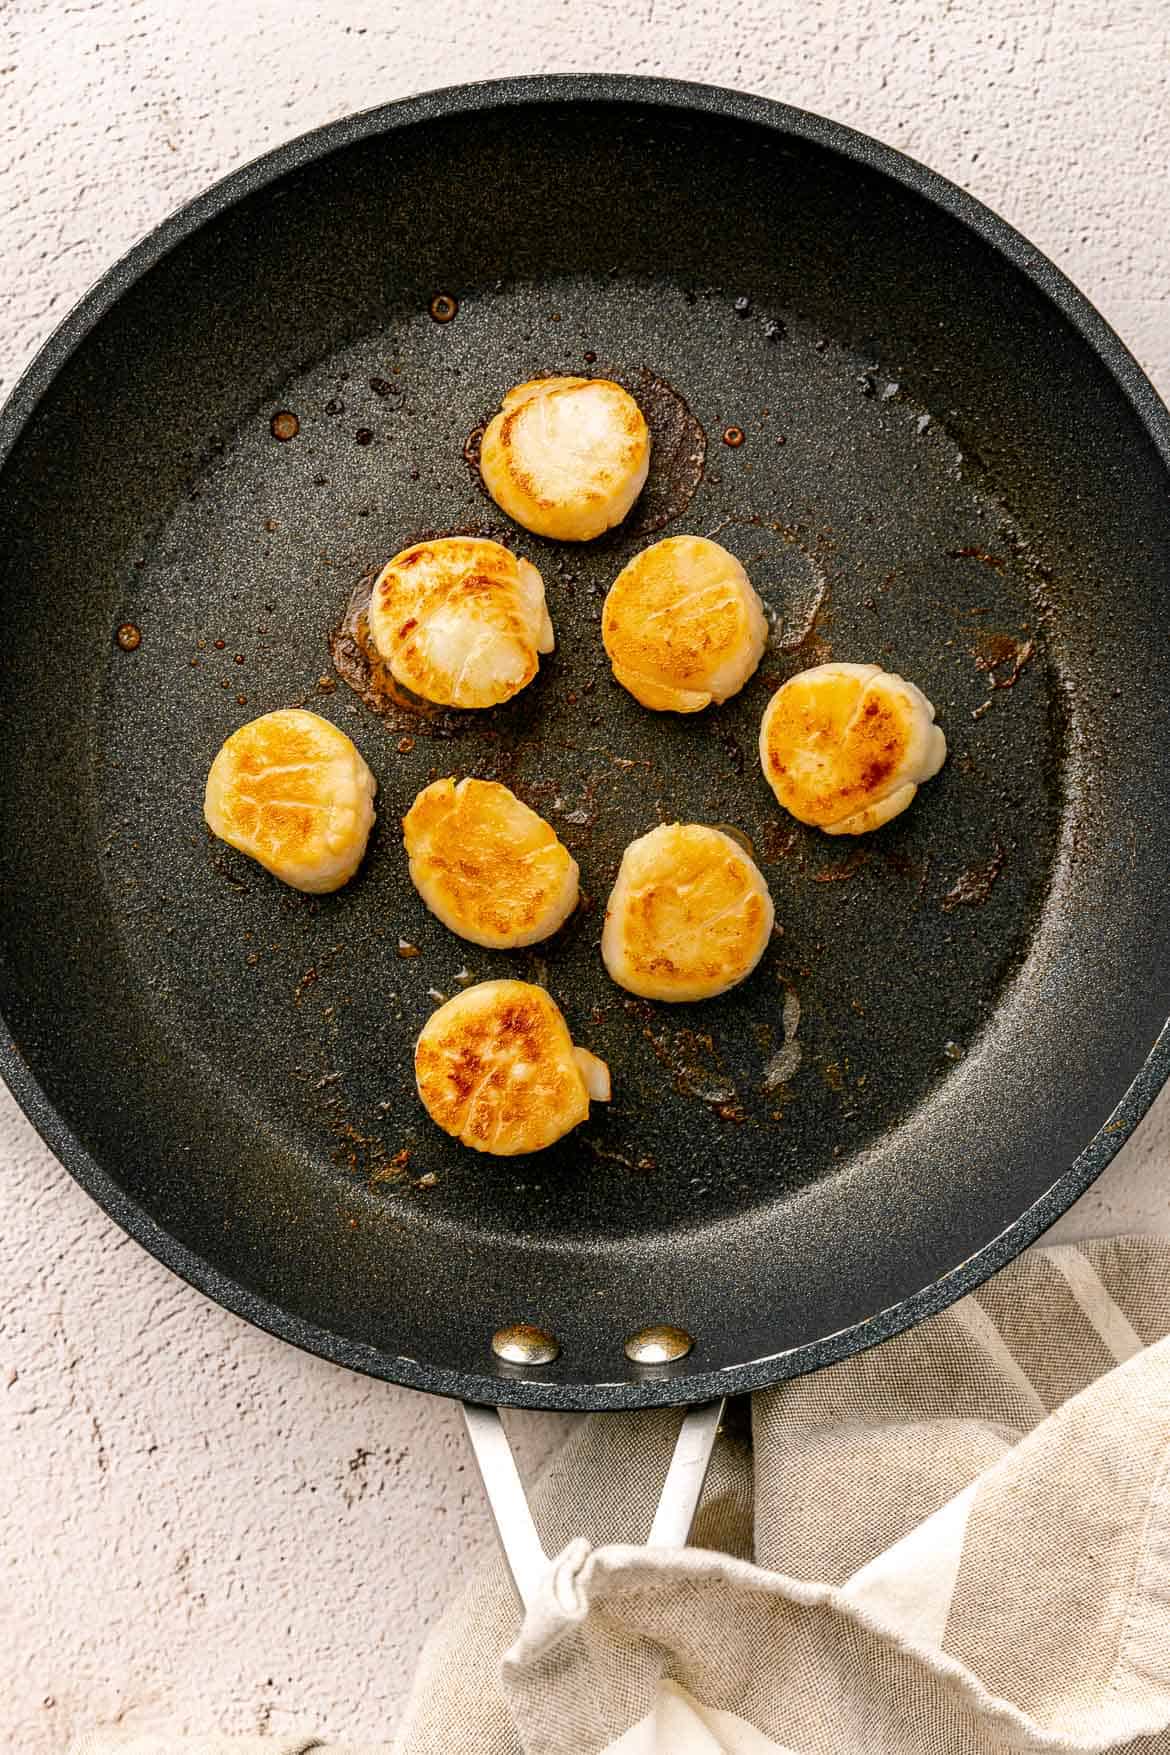 Seared scallops in a non-stick pan.